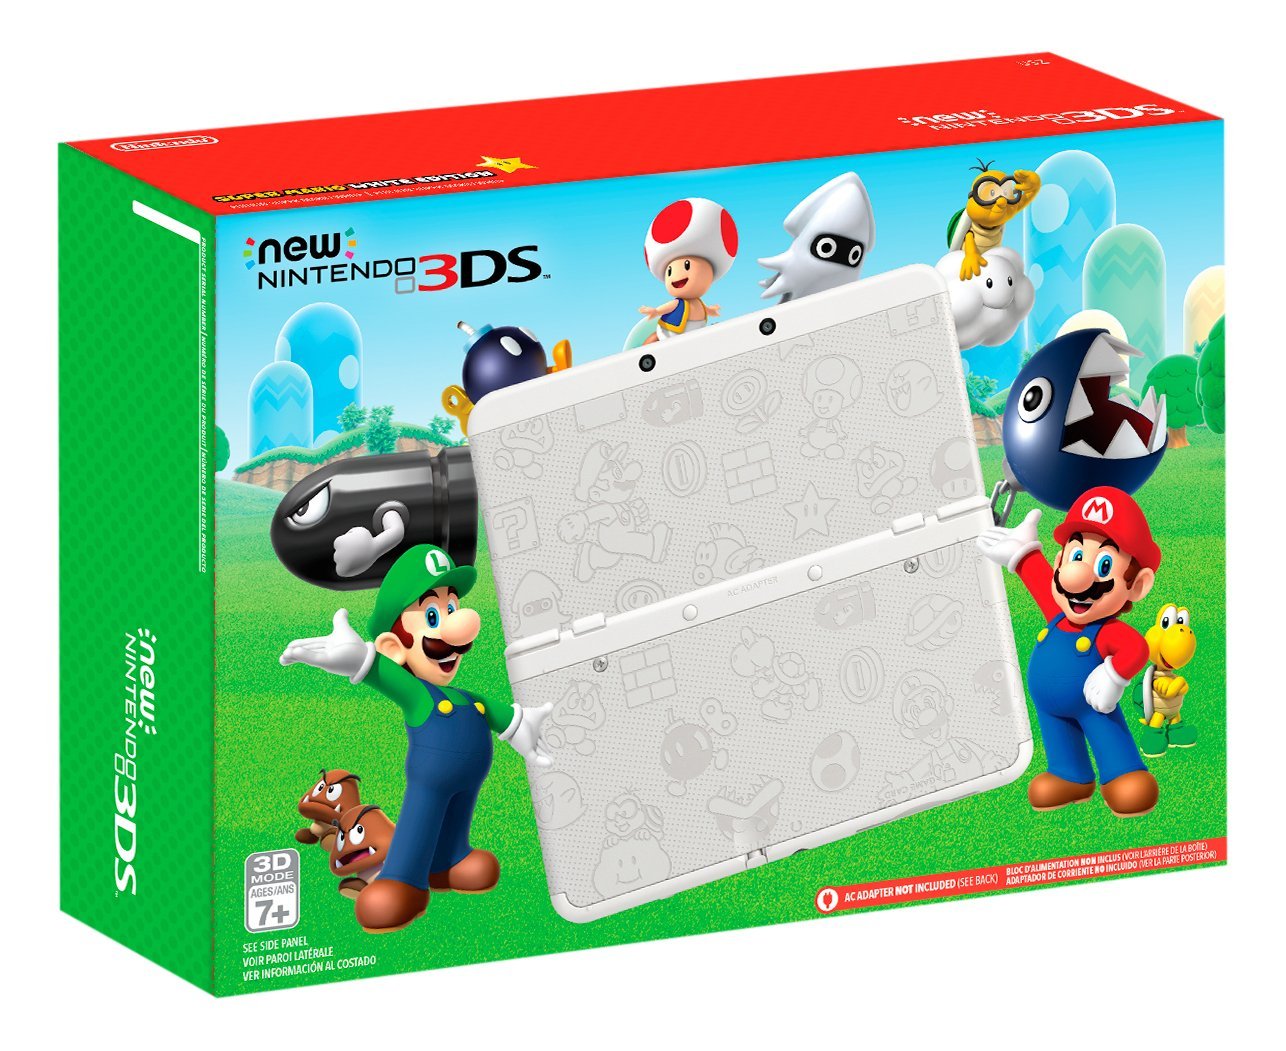 Nintendo New 3DS - Super Mario White Edition [Discontinued] (Renewed)